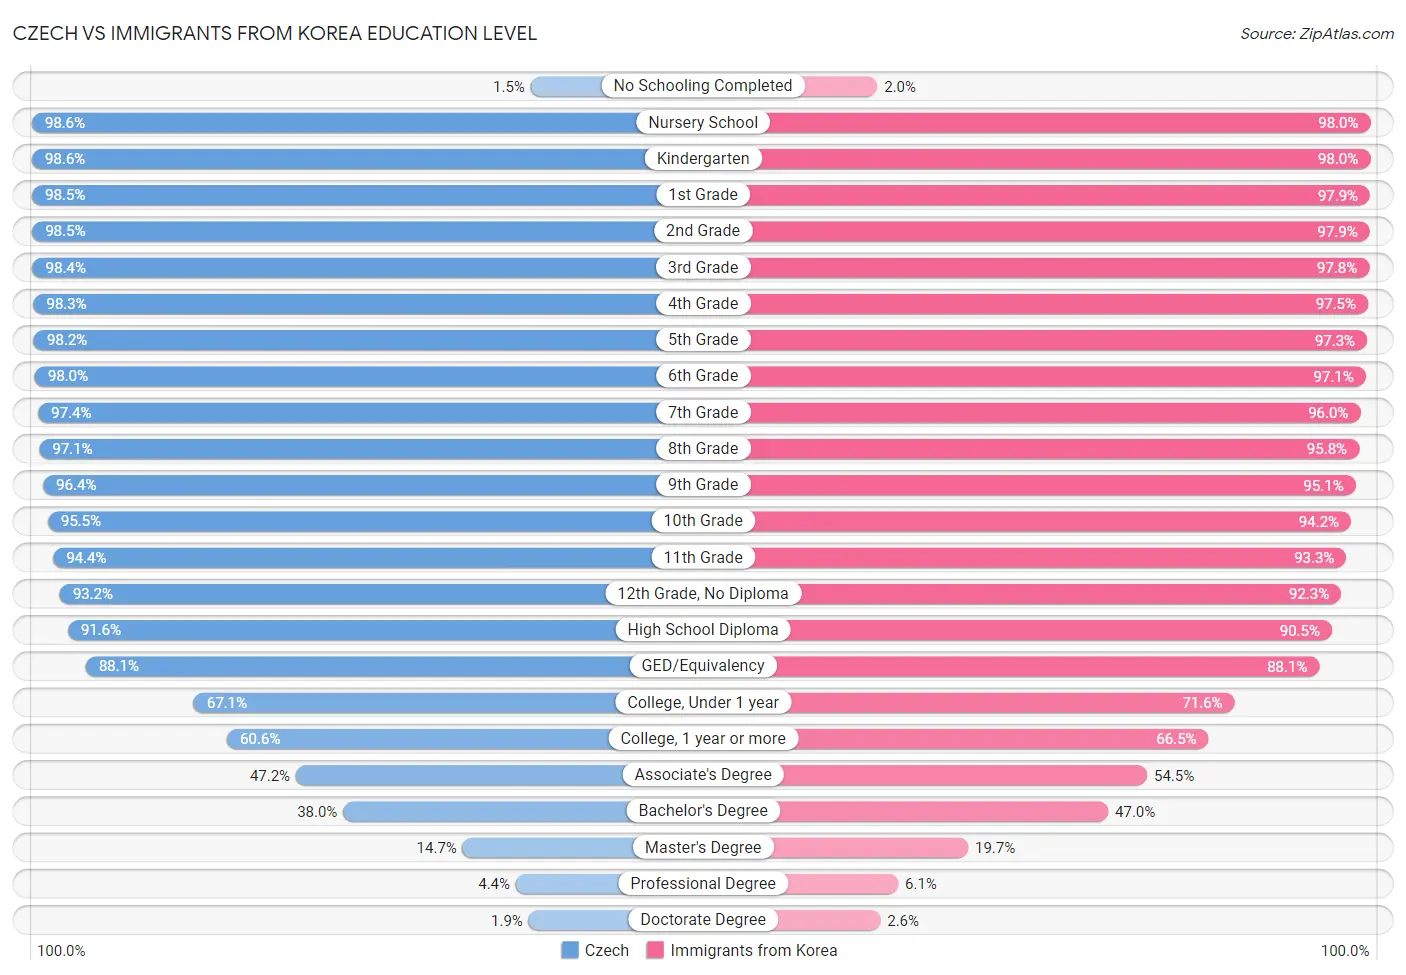 Czech vs Immigrants from Korea Education Level